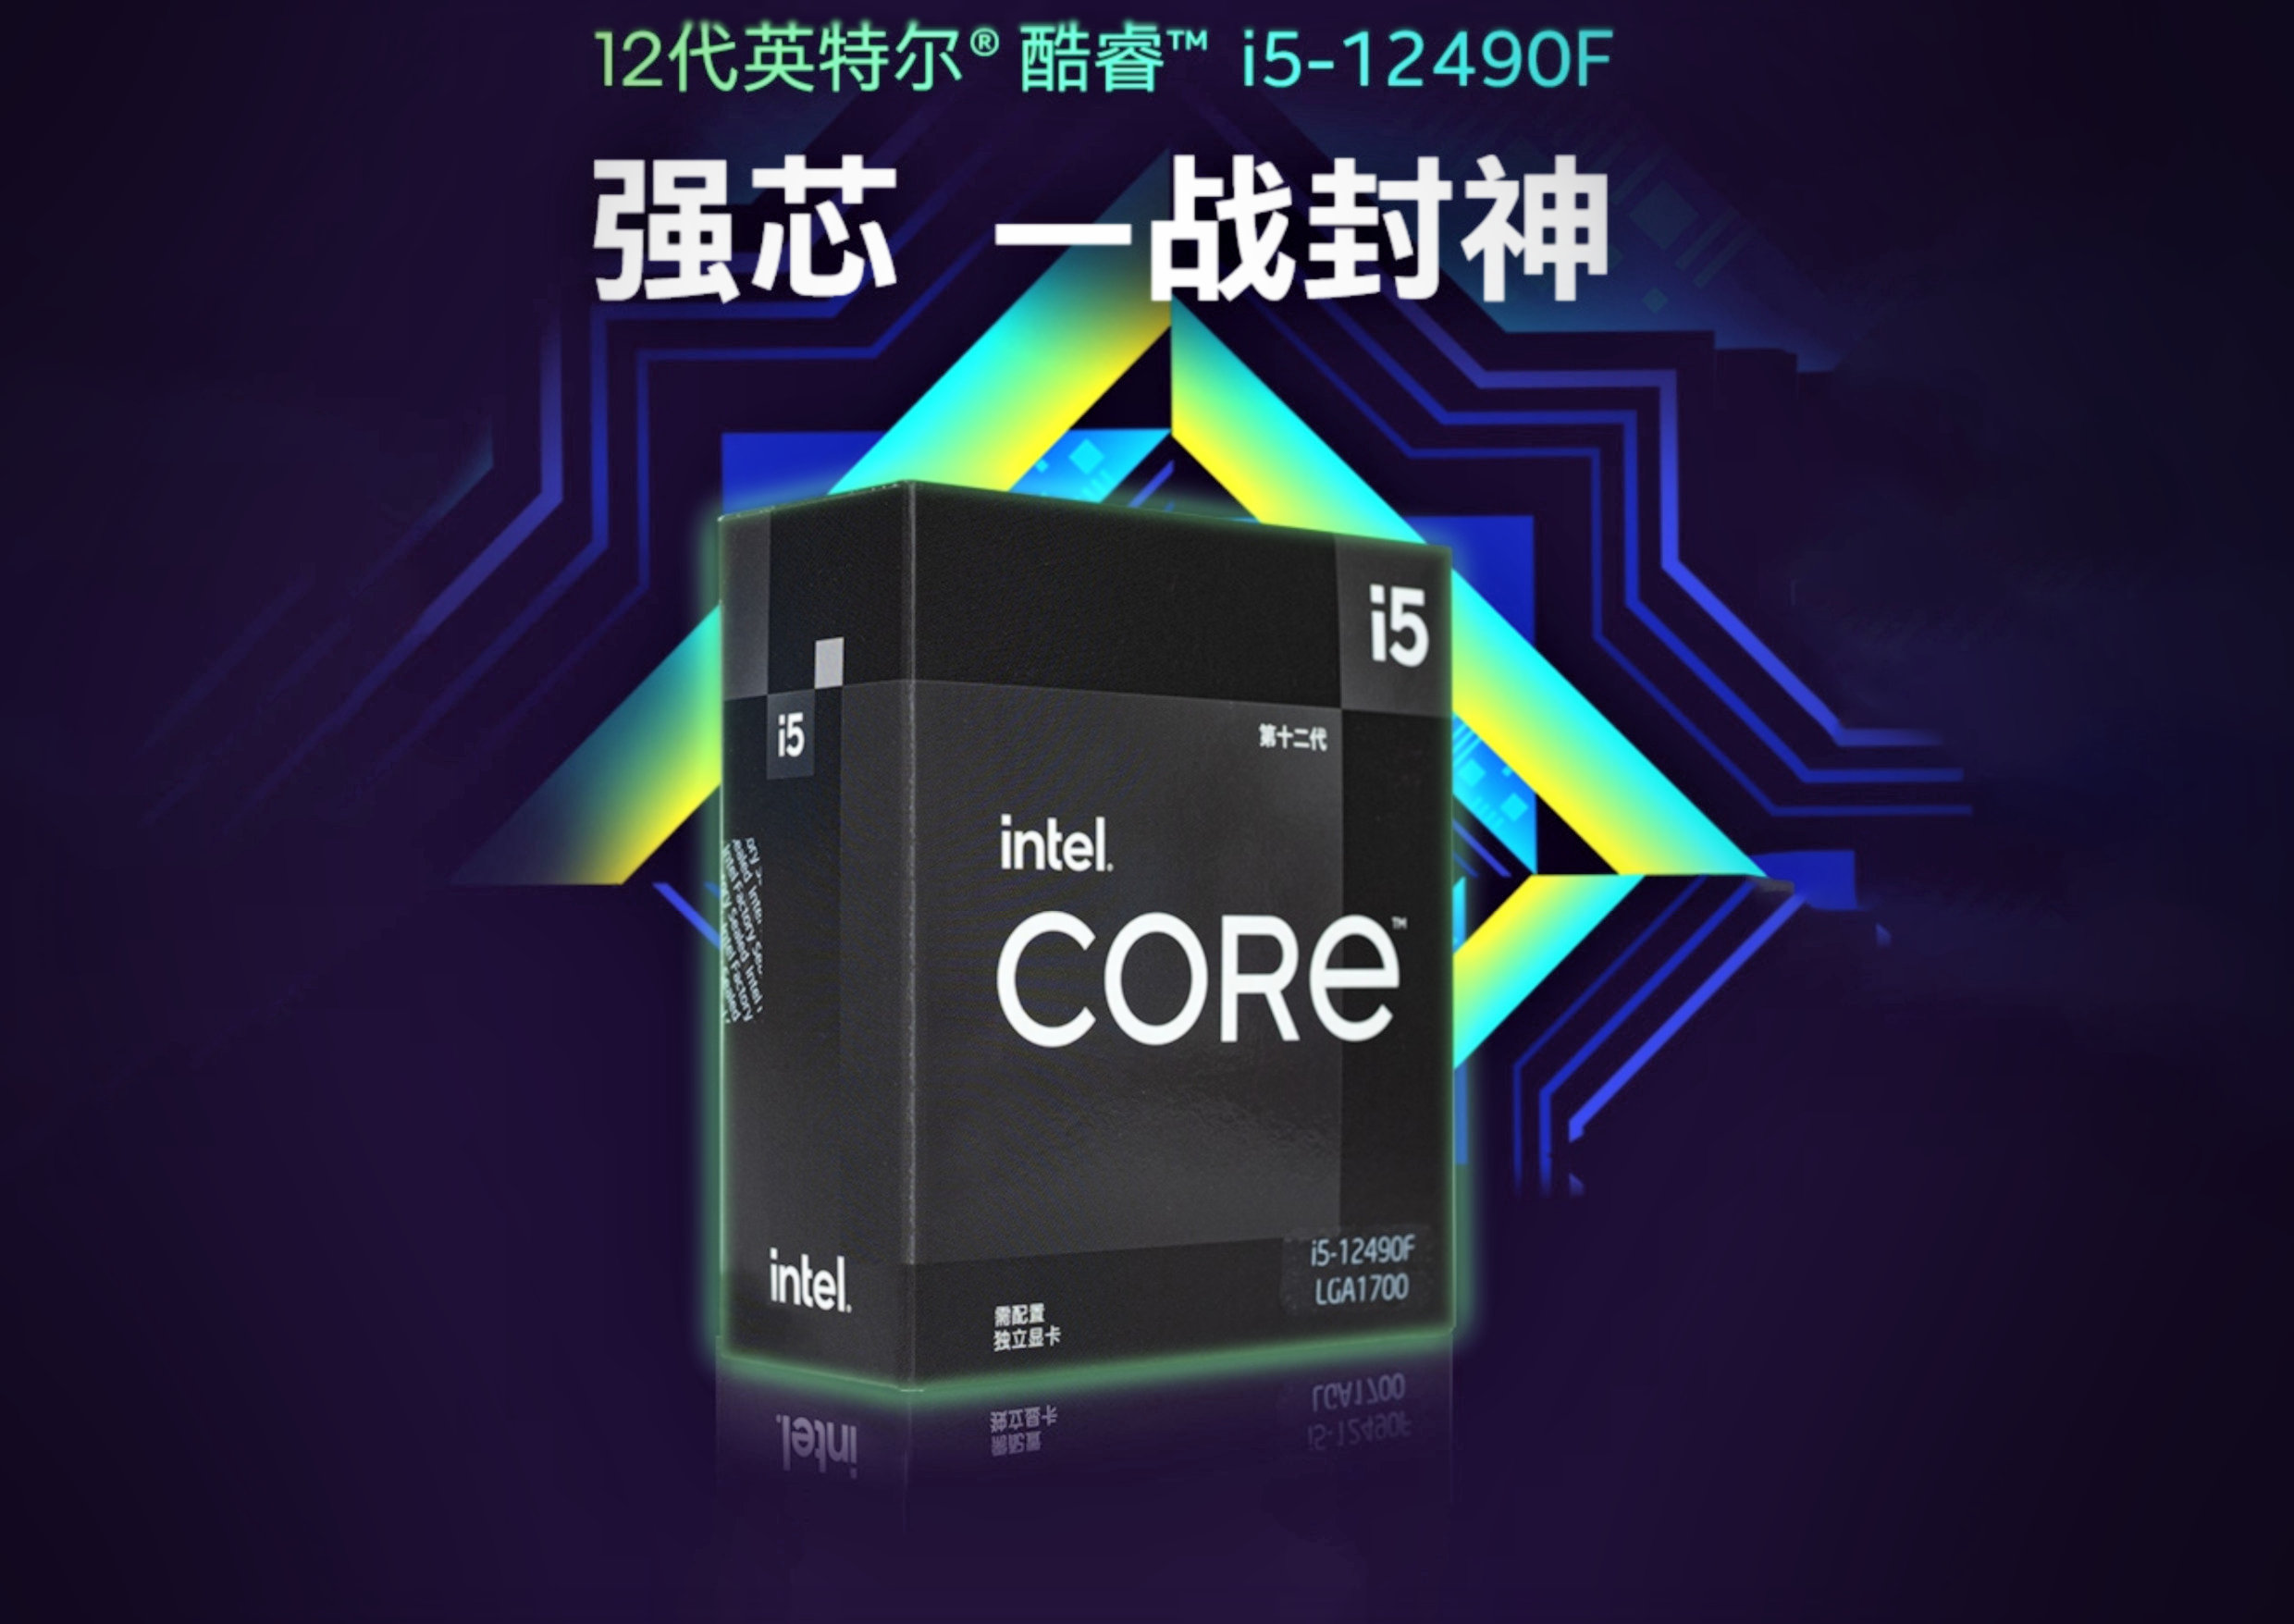 Intel Core i5-12490F is China exclusive 6-core Alder Lake desktop